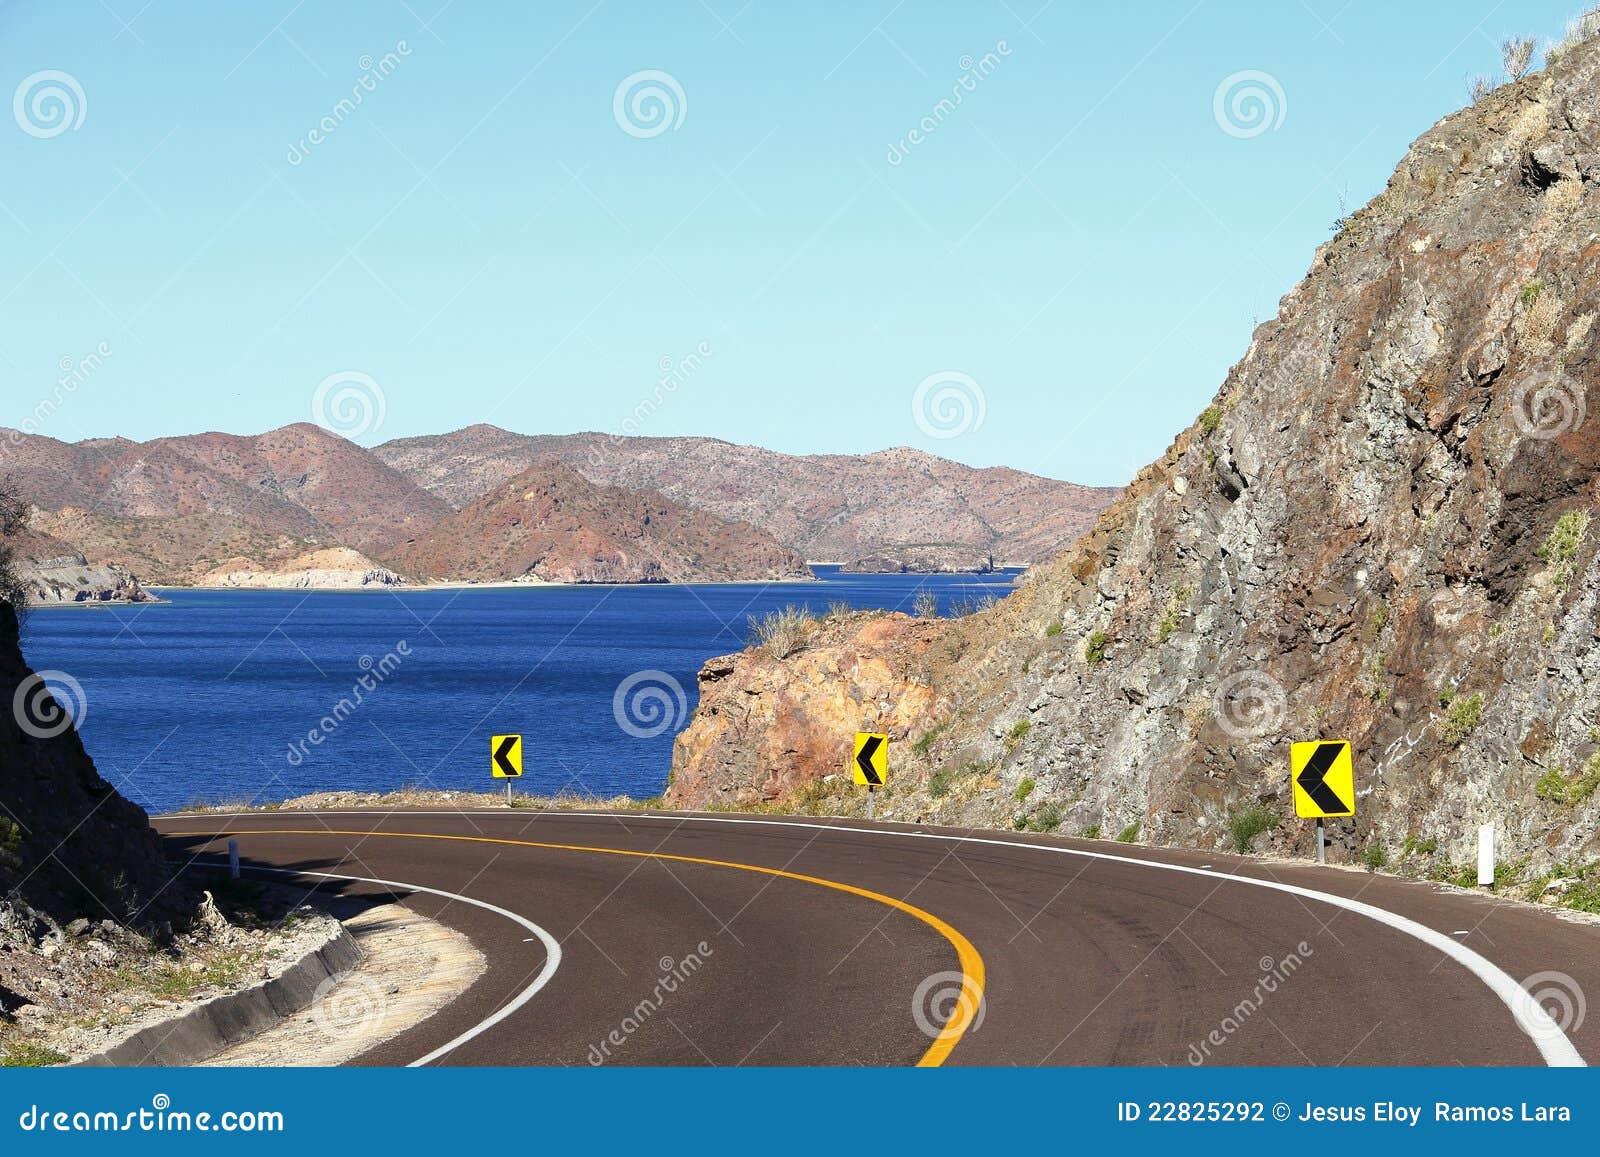 road beside the loreto bays in the sea of baja california, mexico xii